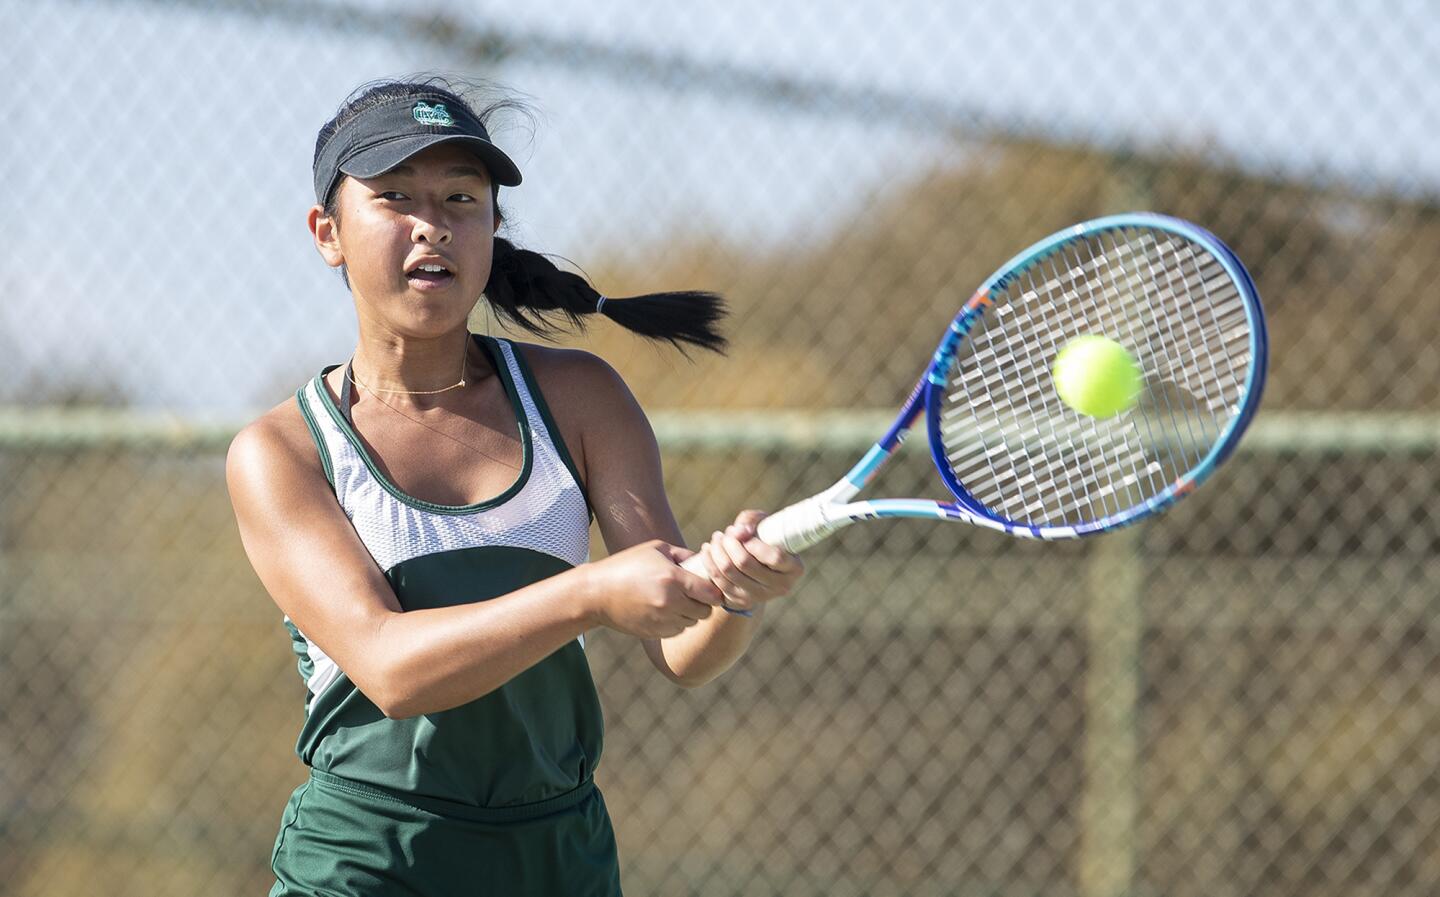 Photo Gallery: Costa Mesa vs. Calvary Chapel in girls’ tennis